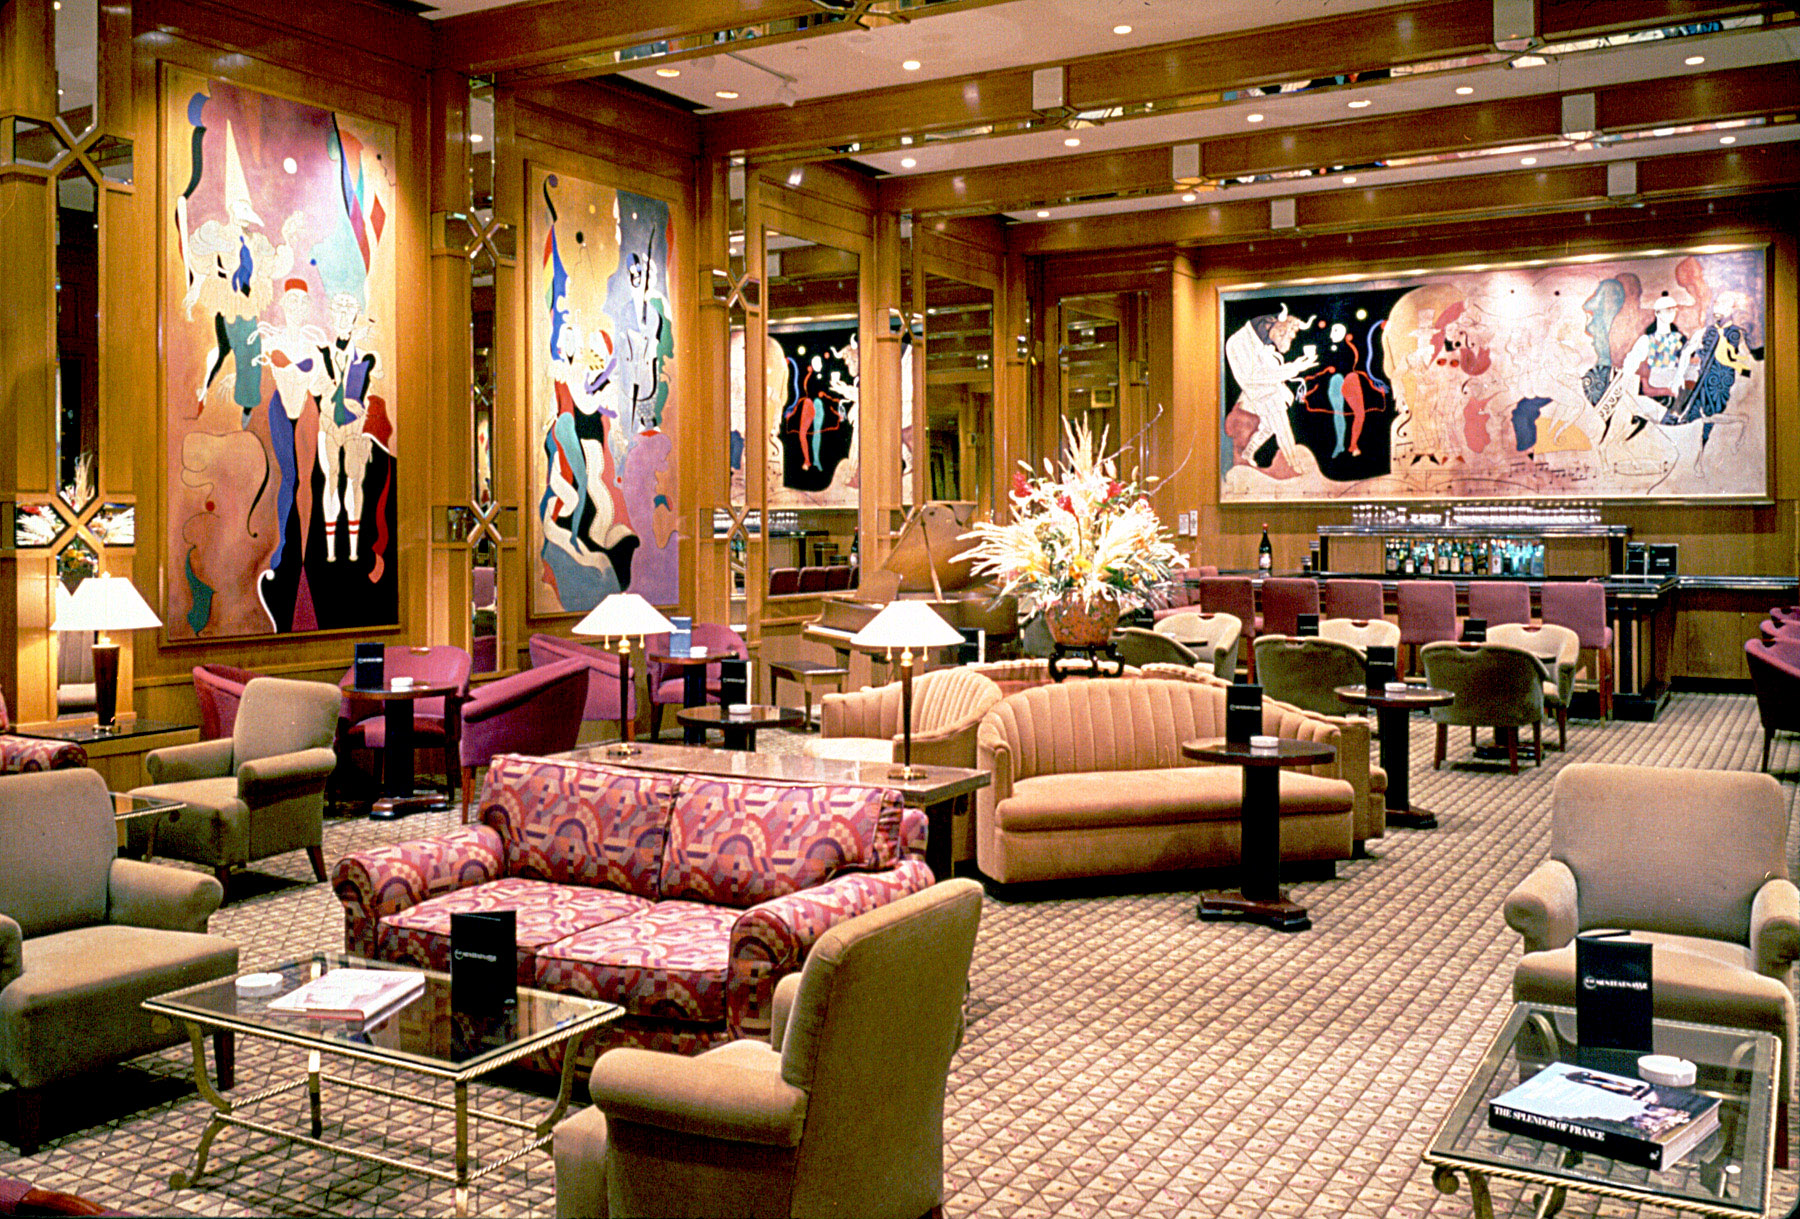 Shin's Restaurant & Hotel Lobby. Tobin Parnes Design. NYC. Hospitality Design. Restaurant. Lobby Bar. Lounge.